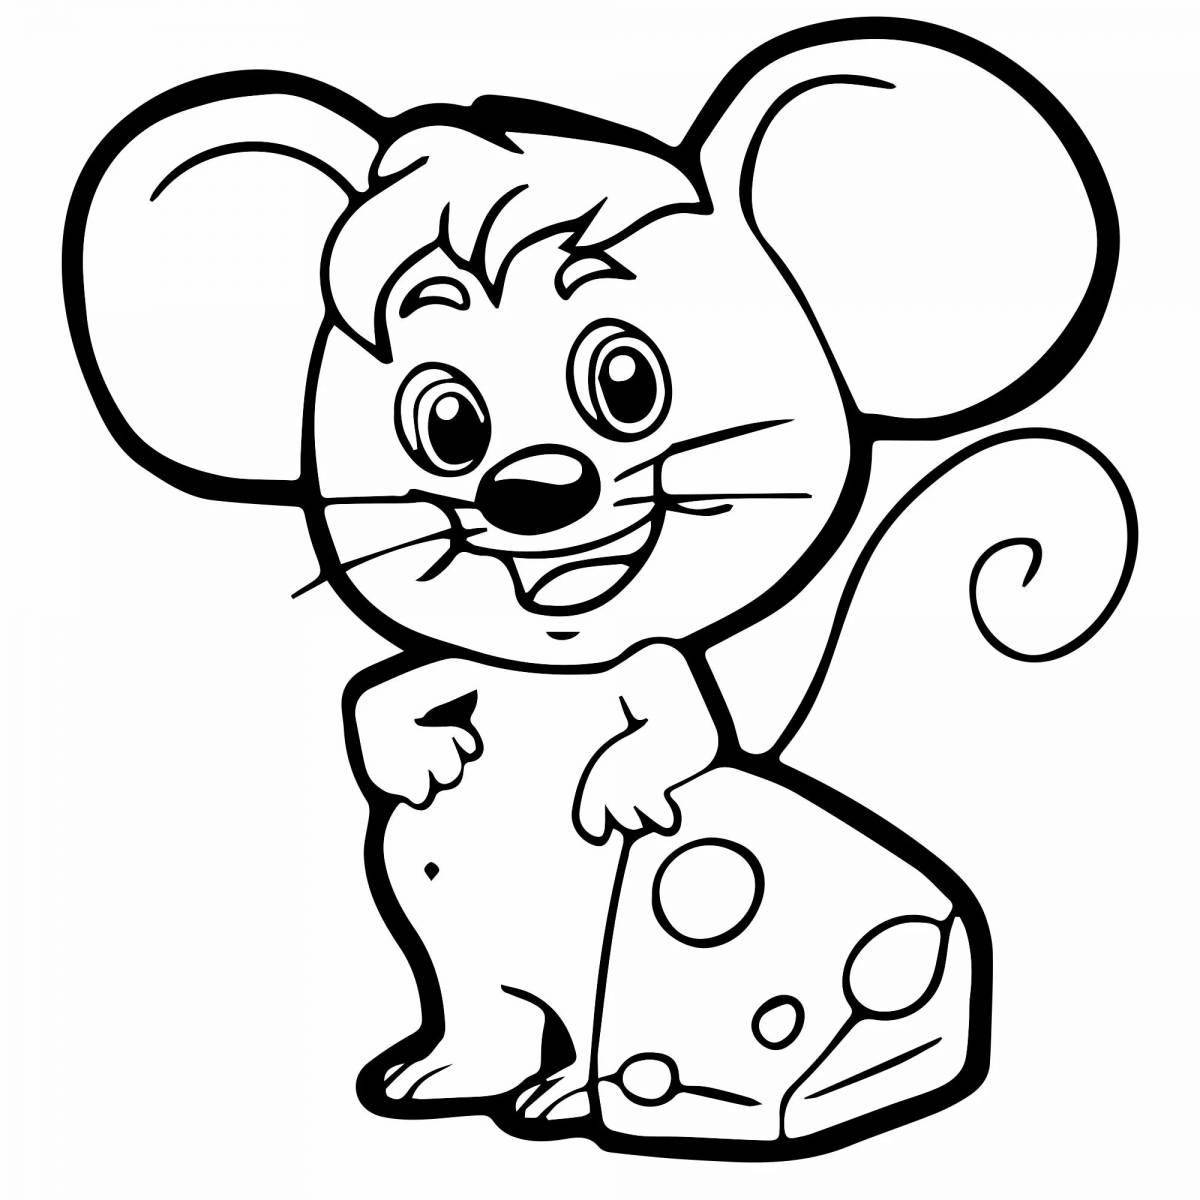 Coloring playful mouse norushka